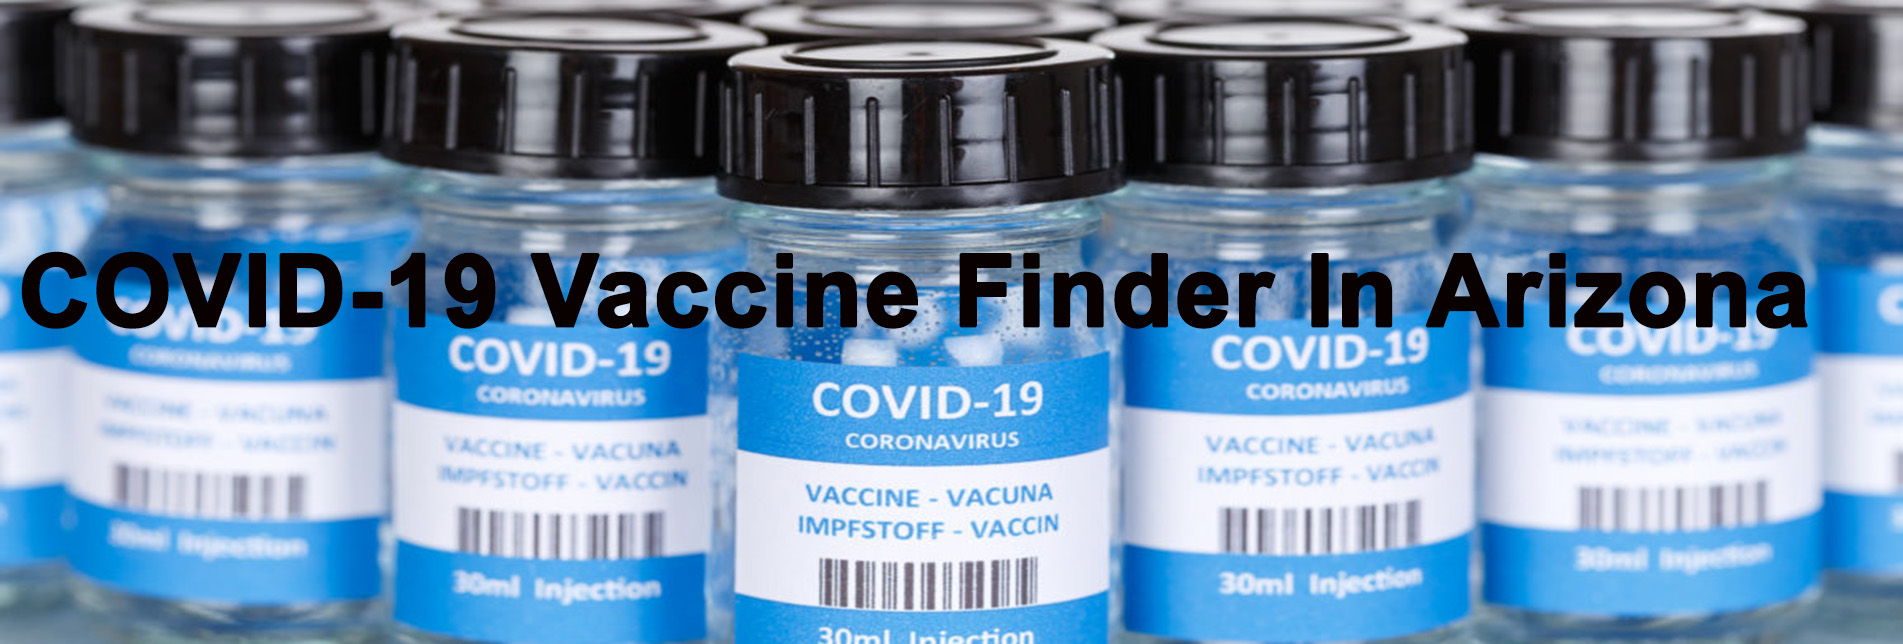 Arizona COVID-19 Vaccine Finder Information